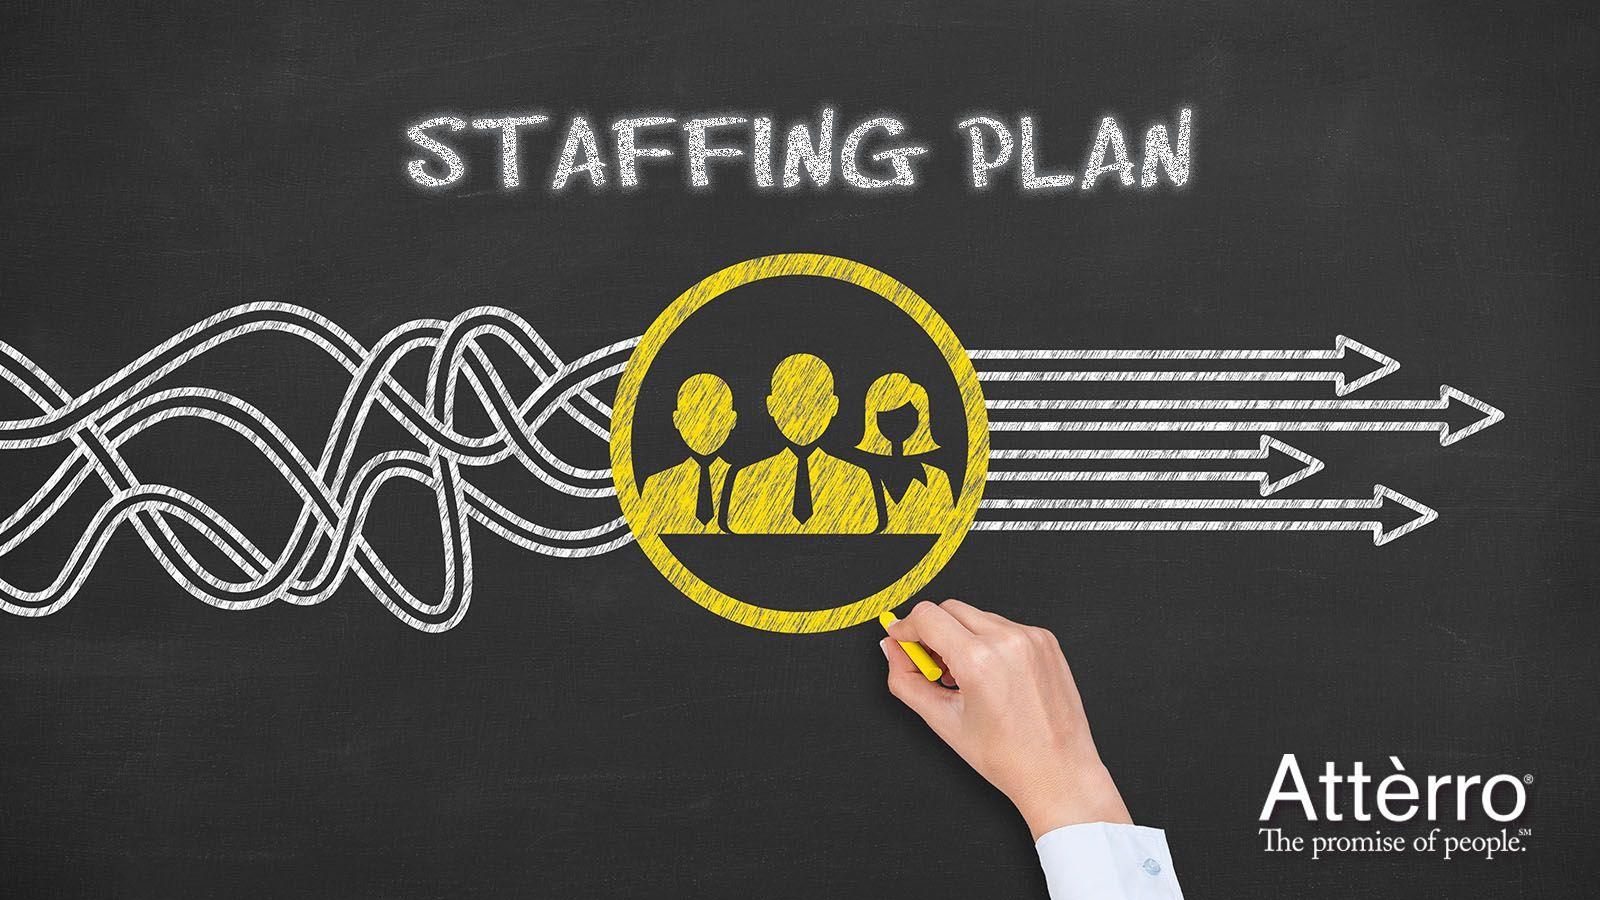 Atterro Logo - Create Your 2019 Staffing Plan in Five Steps - Atterro